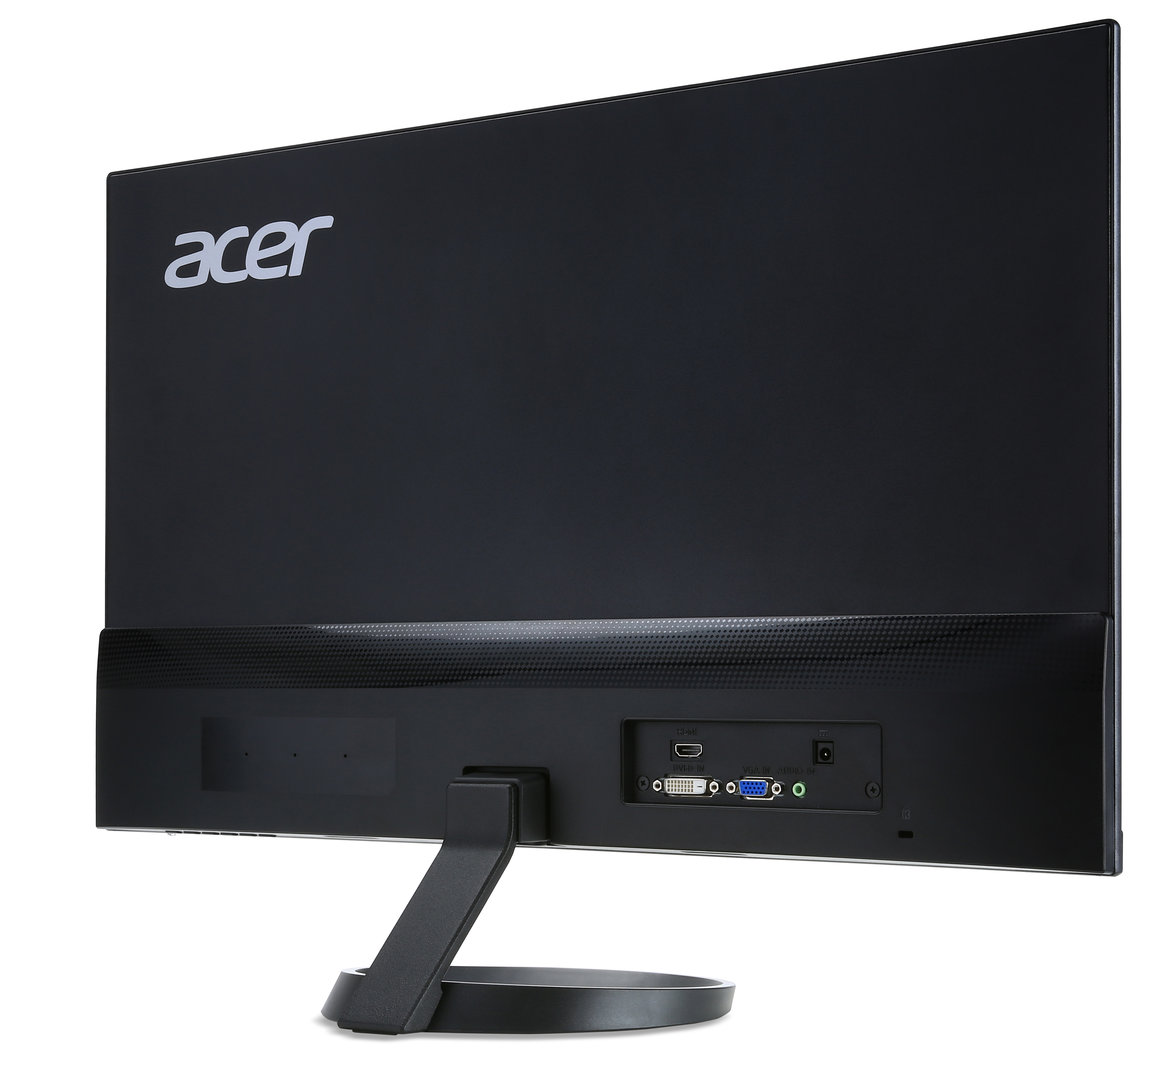 Acer R271H